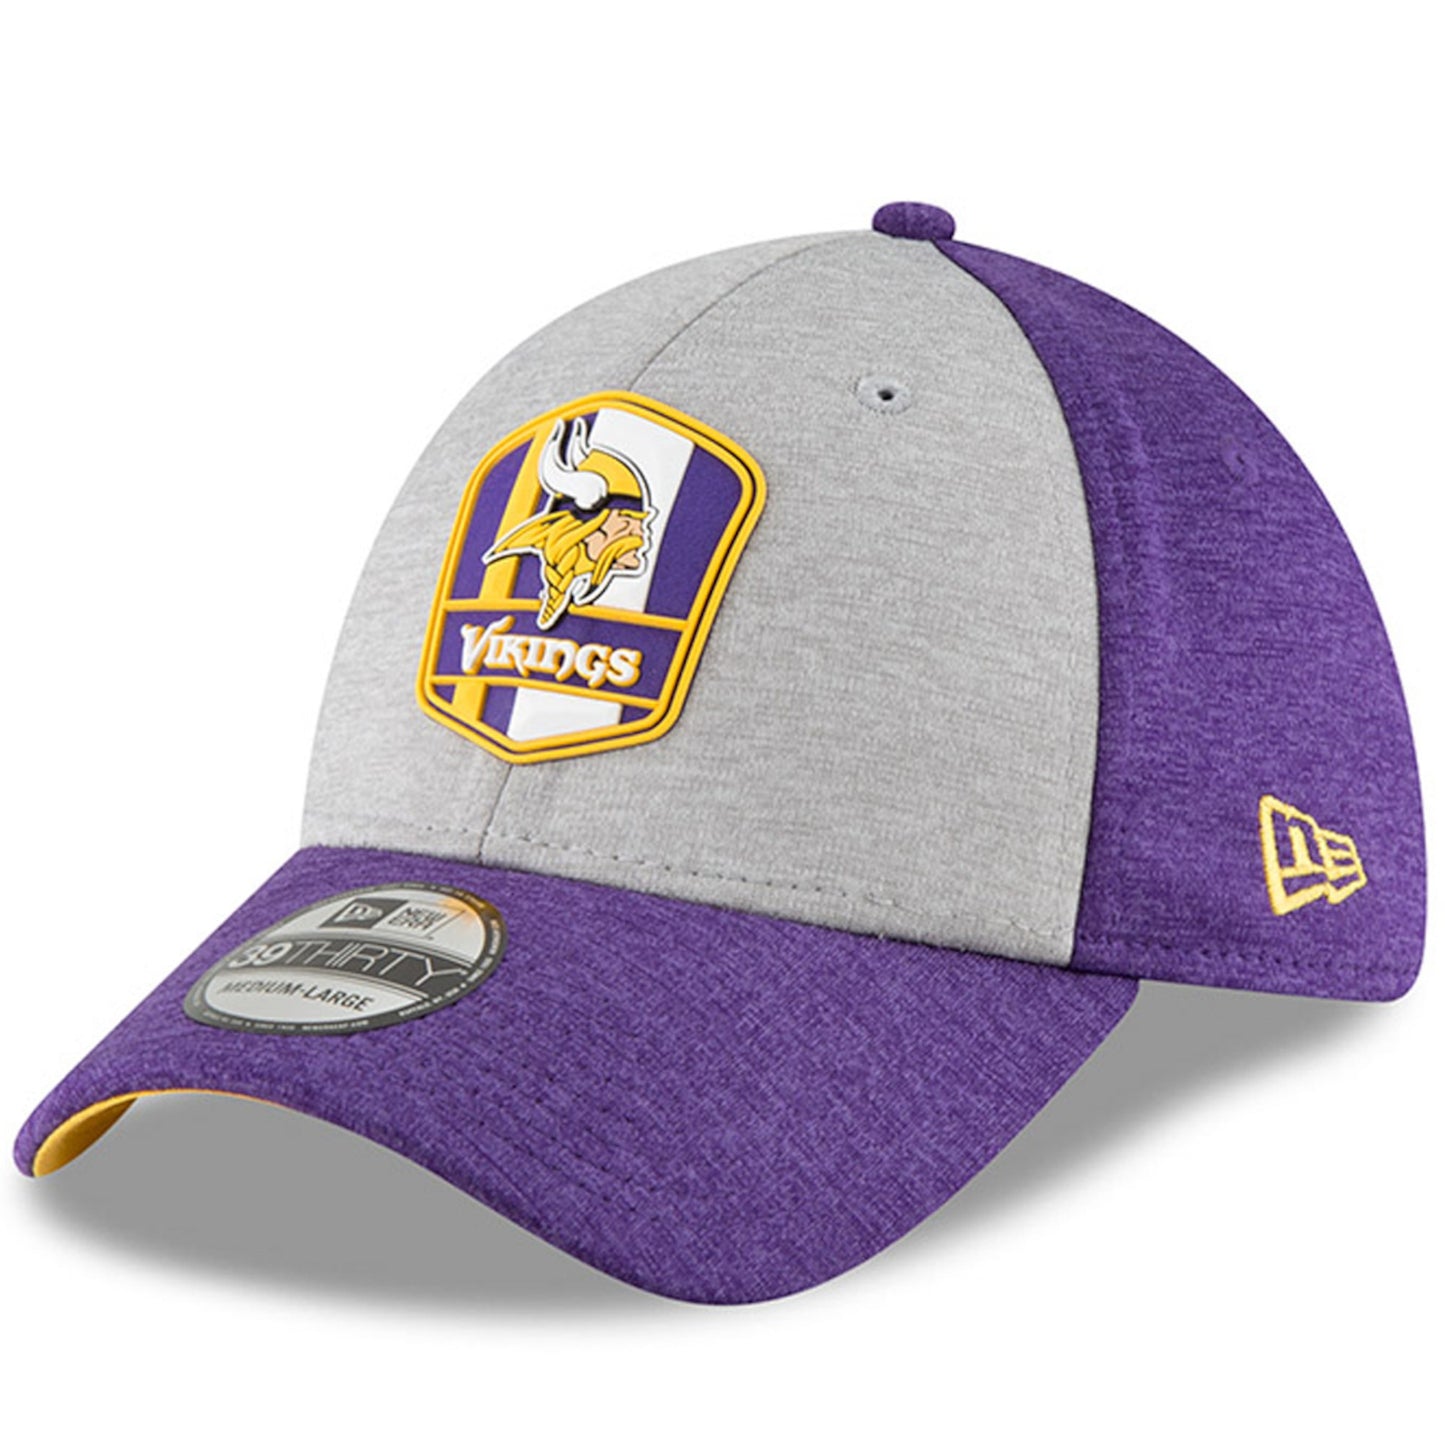 Men's Minnesota Vikings New Era Heather Gray/Purple NFL18 Sideline Road Official 39THIRTY Flex Hat